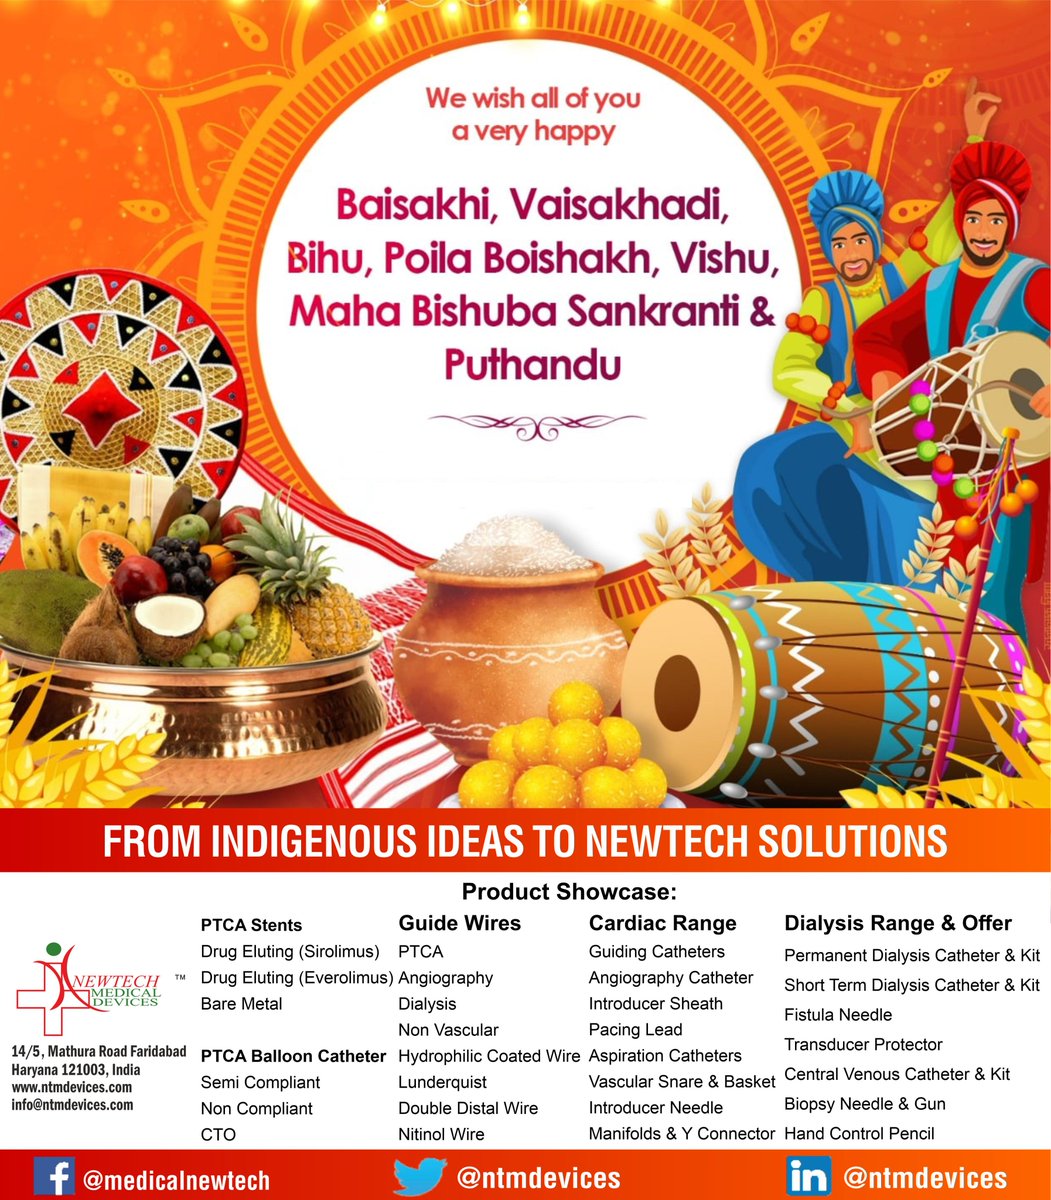 Wishing all a very happy Baisakhi, Vaisakhadi, Bihu, Poila Boishakh, Vishu, Maha Bisuba Sankranti and Puthandu.
 
May these festivals bring harmony, joy and prosperity in your lives.